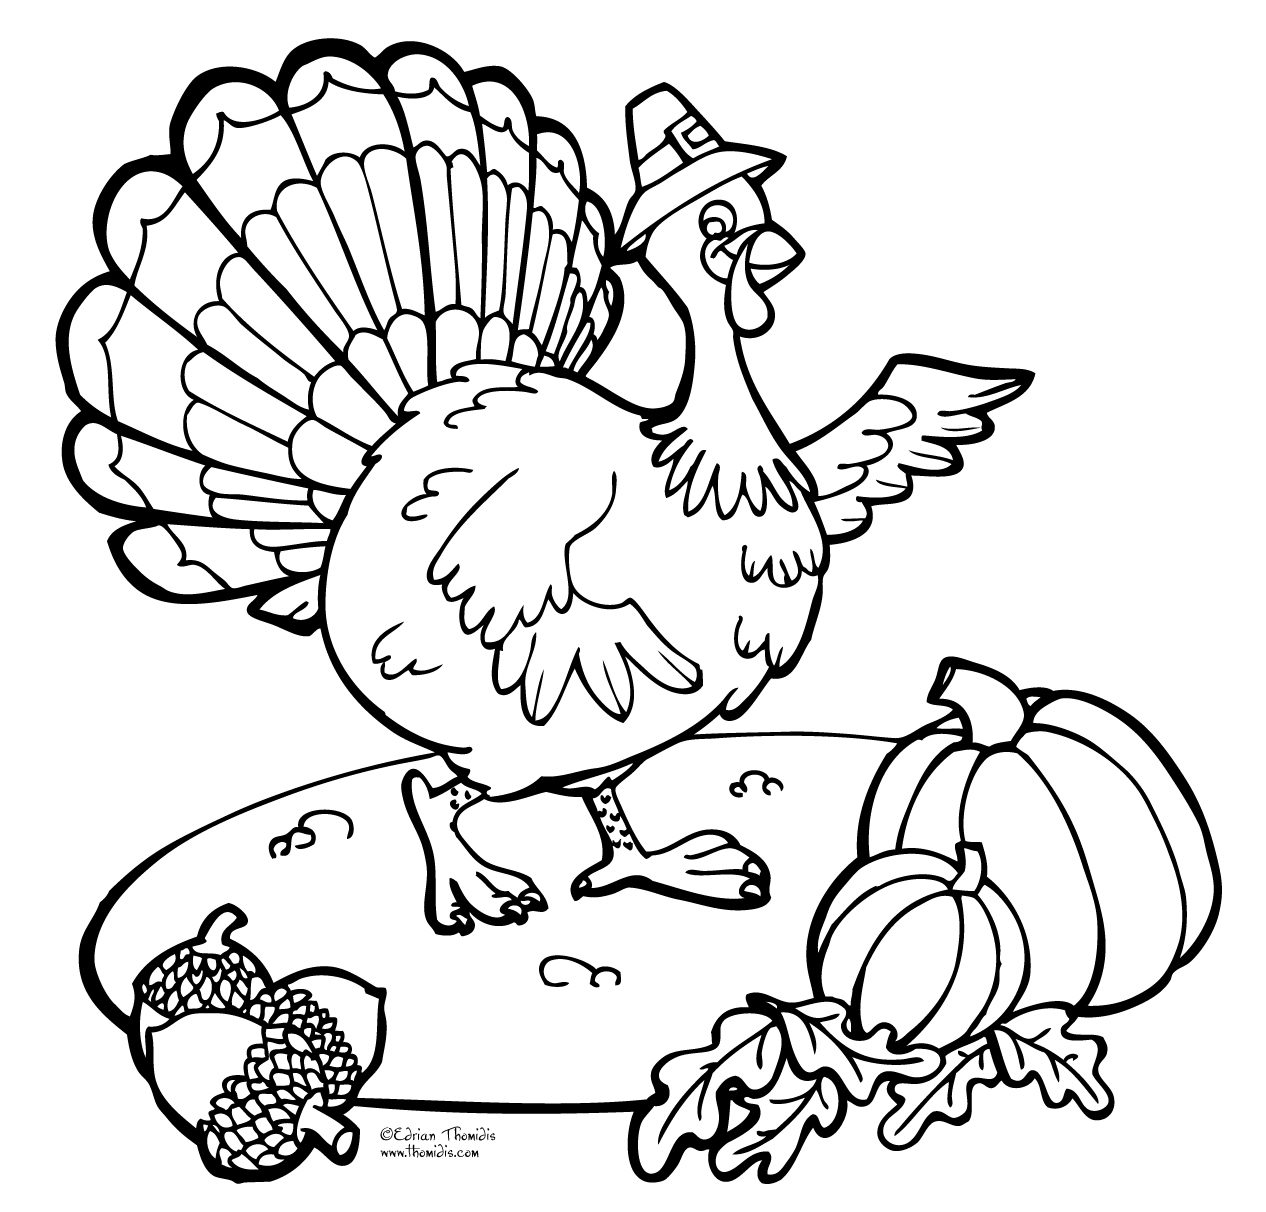 Printable thanksgivingturkeycoloringpage